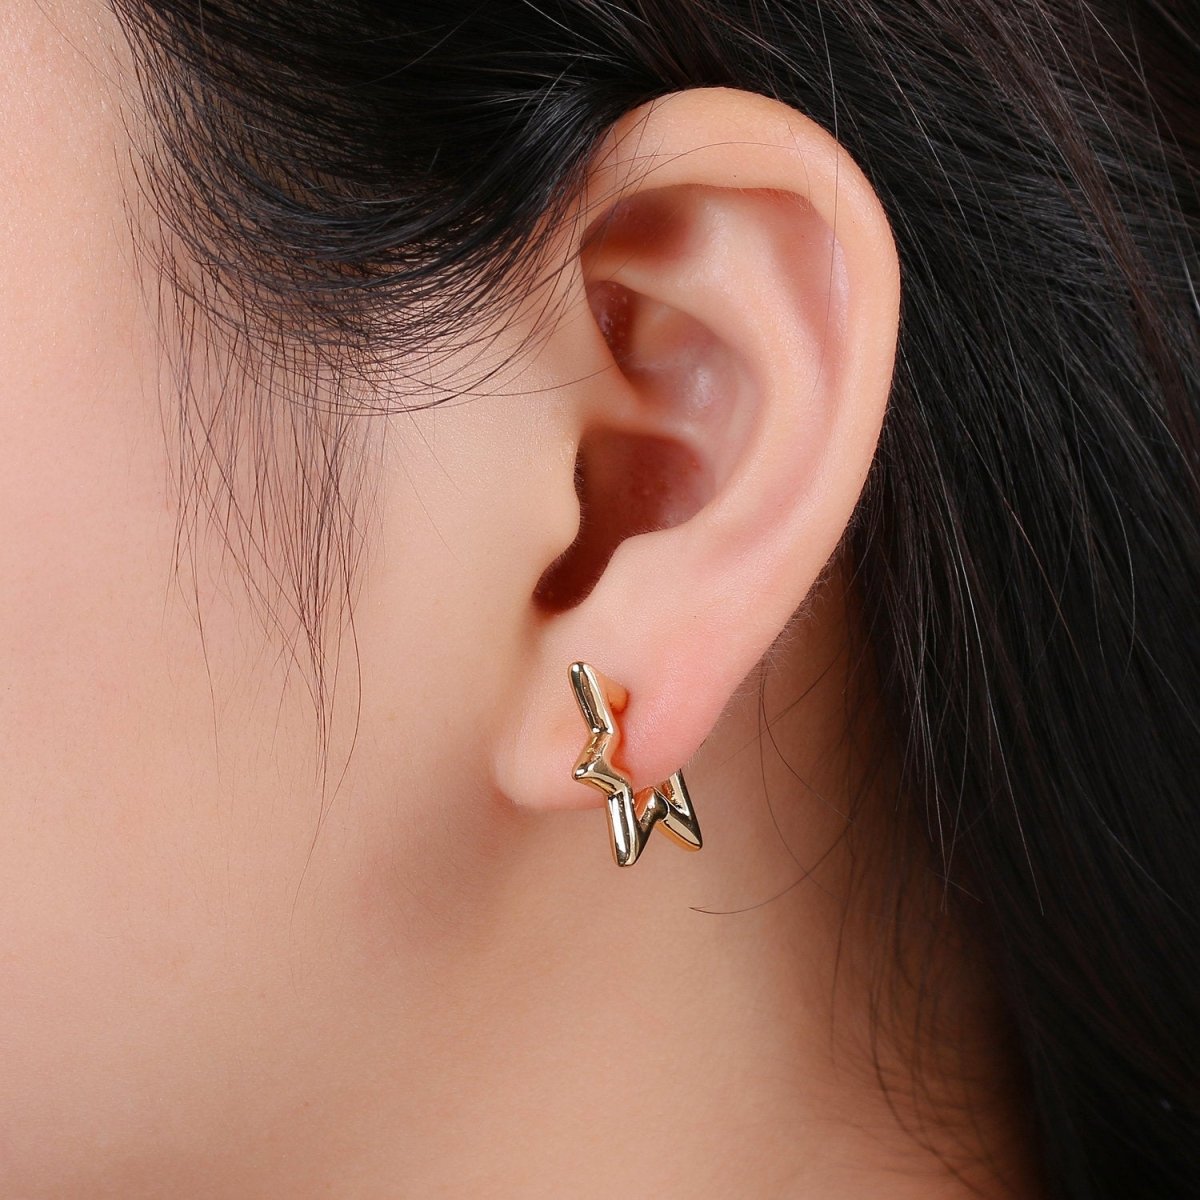 Gold Star Huggie Earring 14k Gold Filled Earring, Statement Earring Rock Star Earring P-039 - DLUXCA